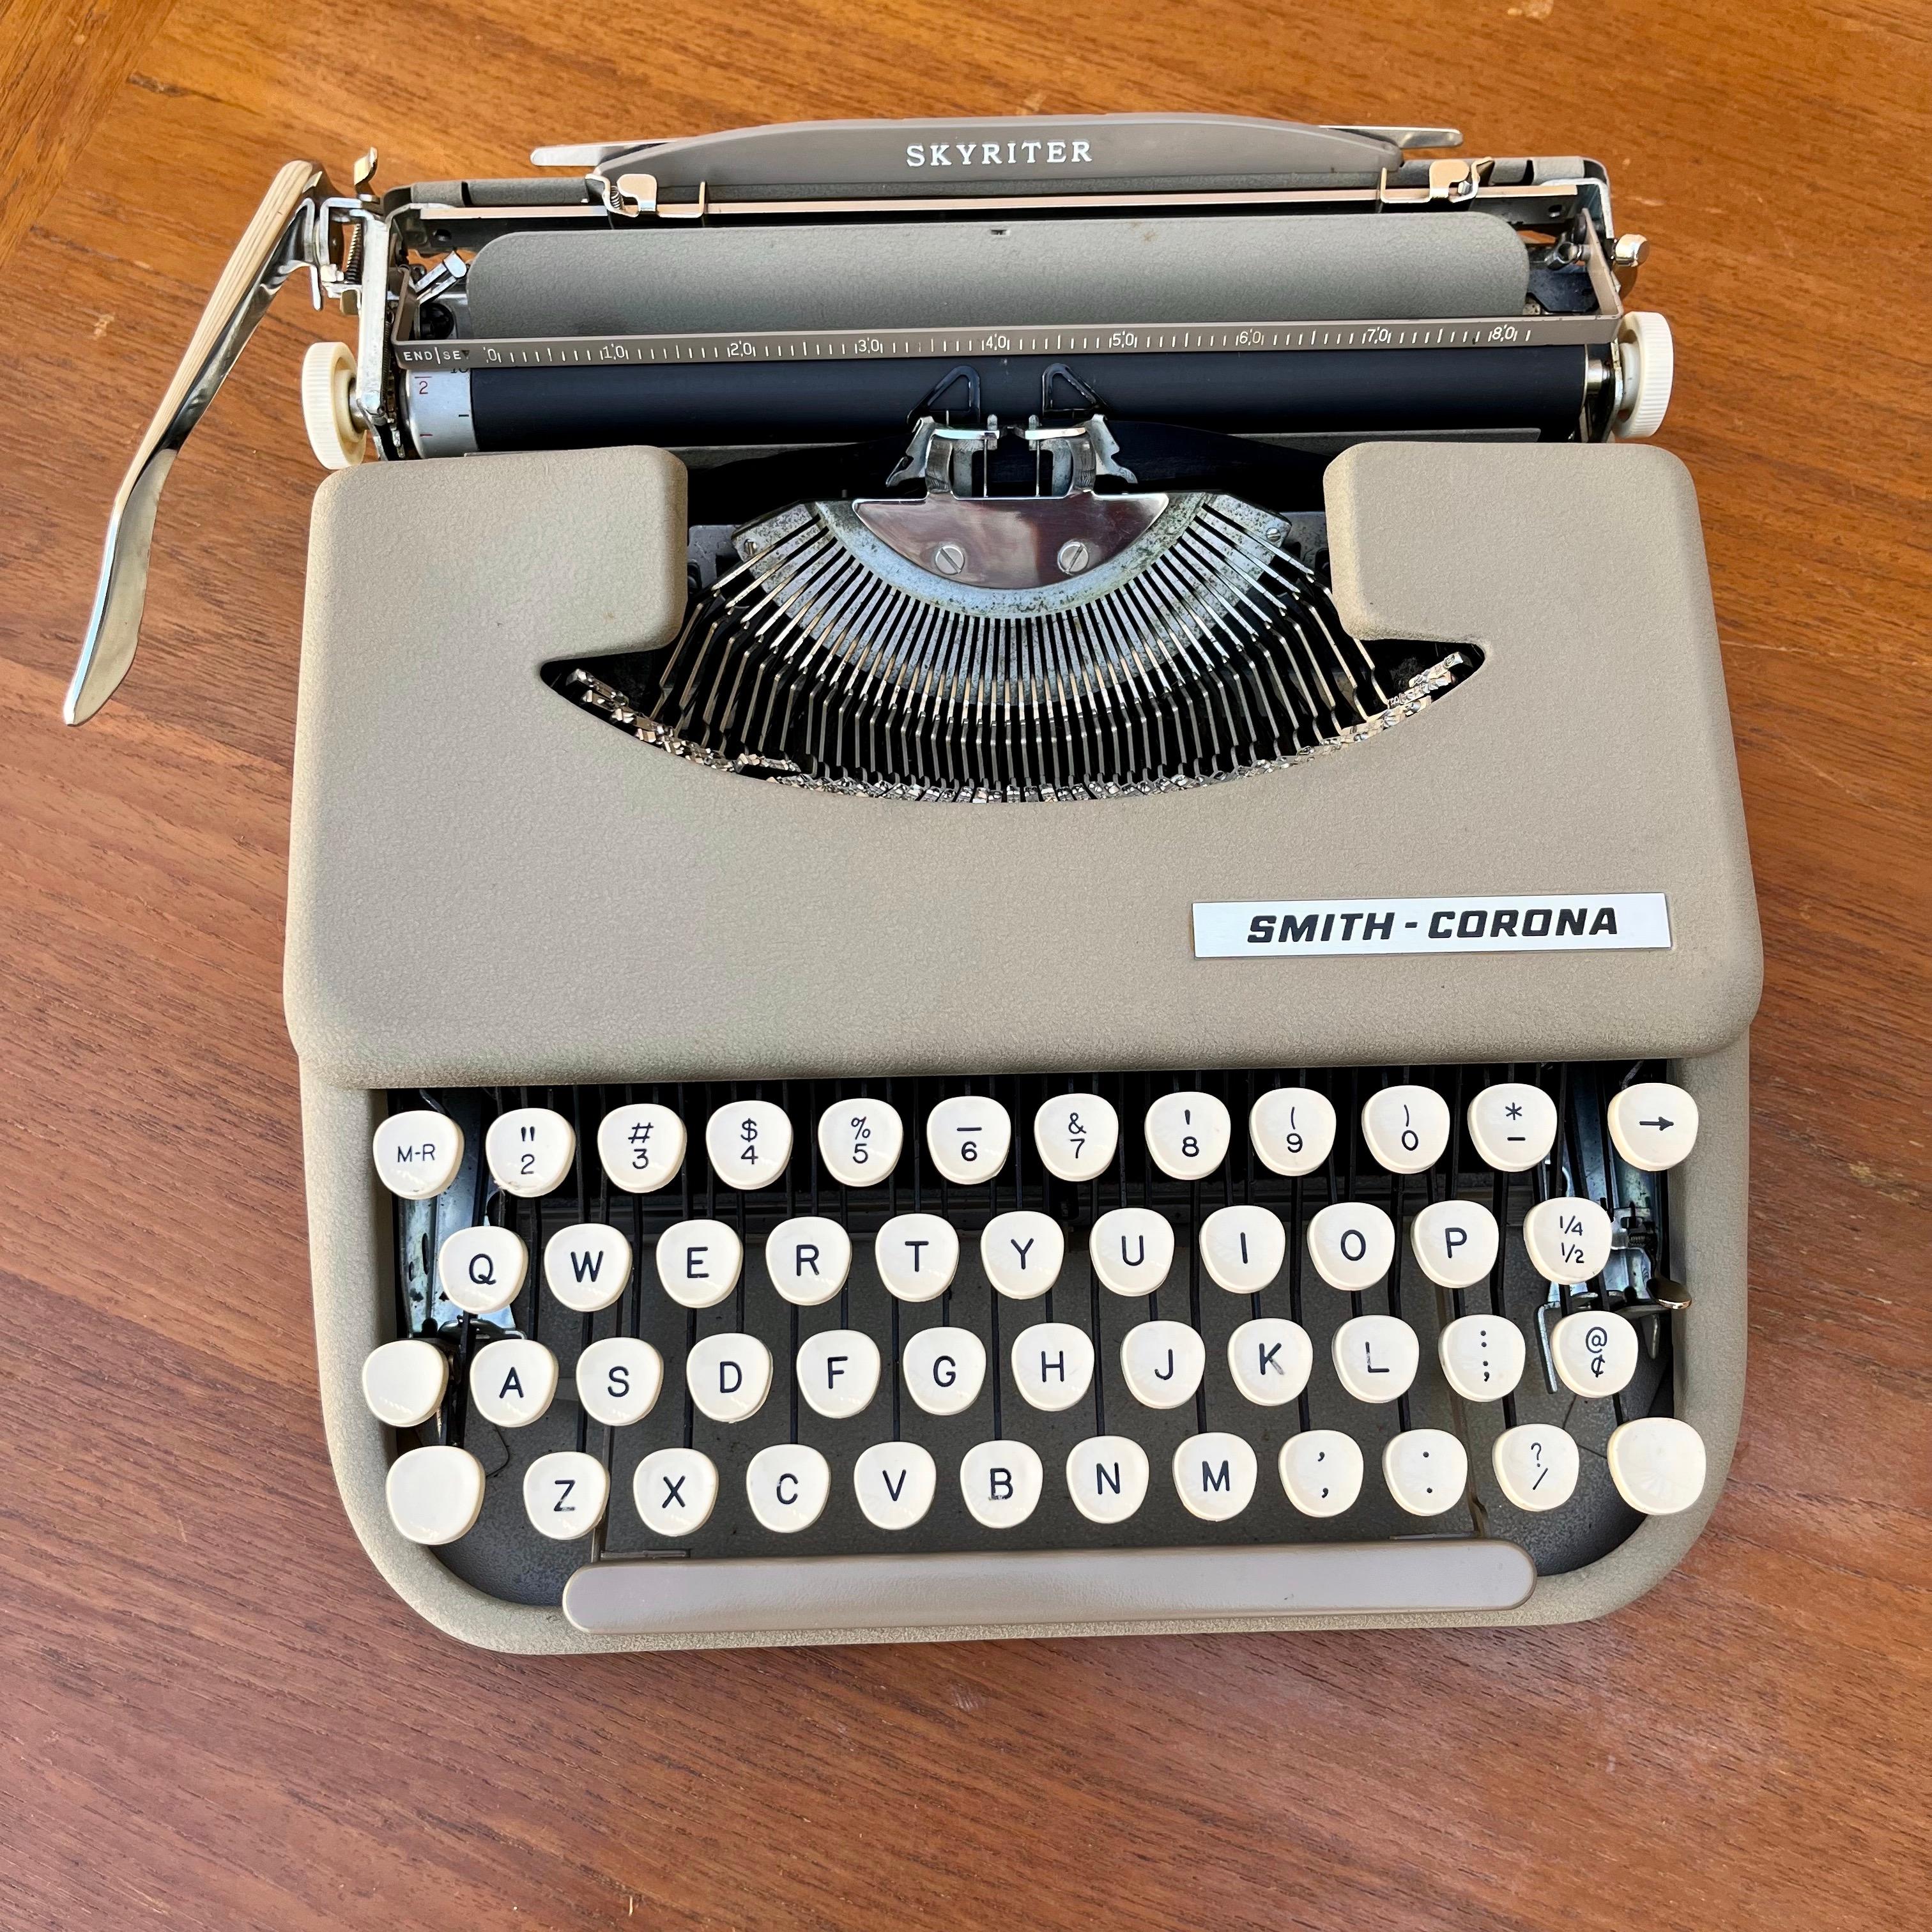 smith corona skyriter typewriter